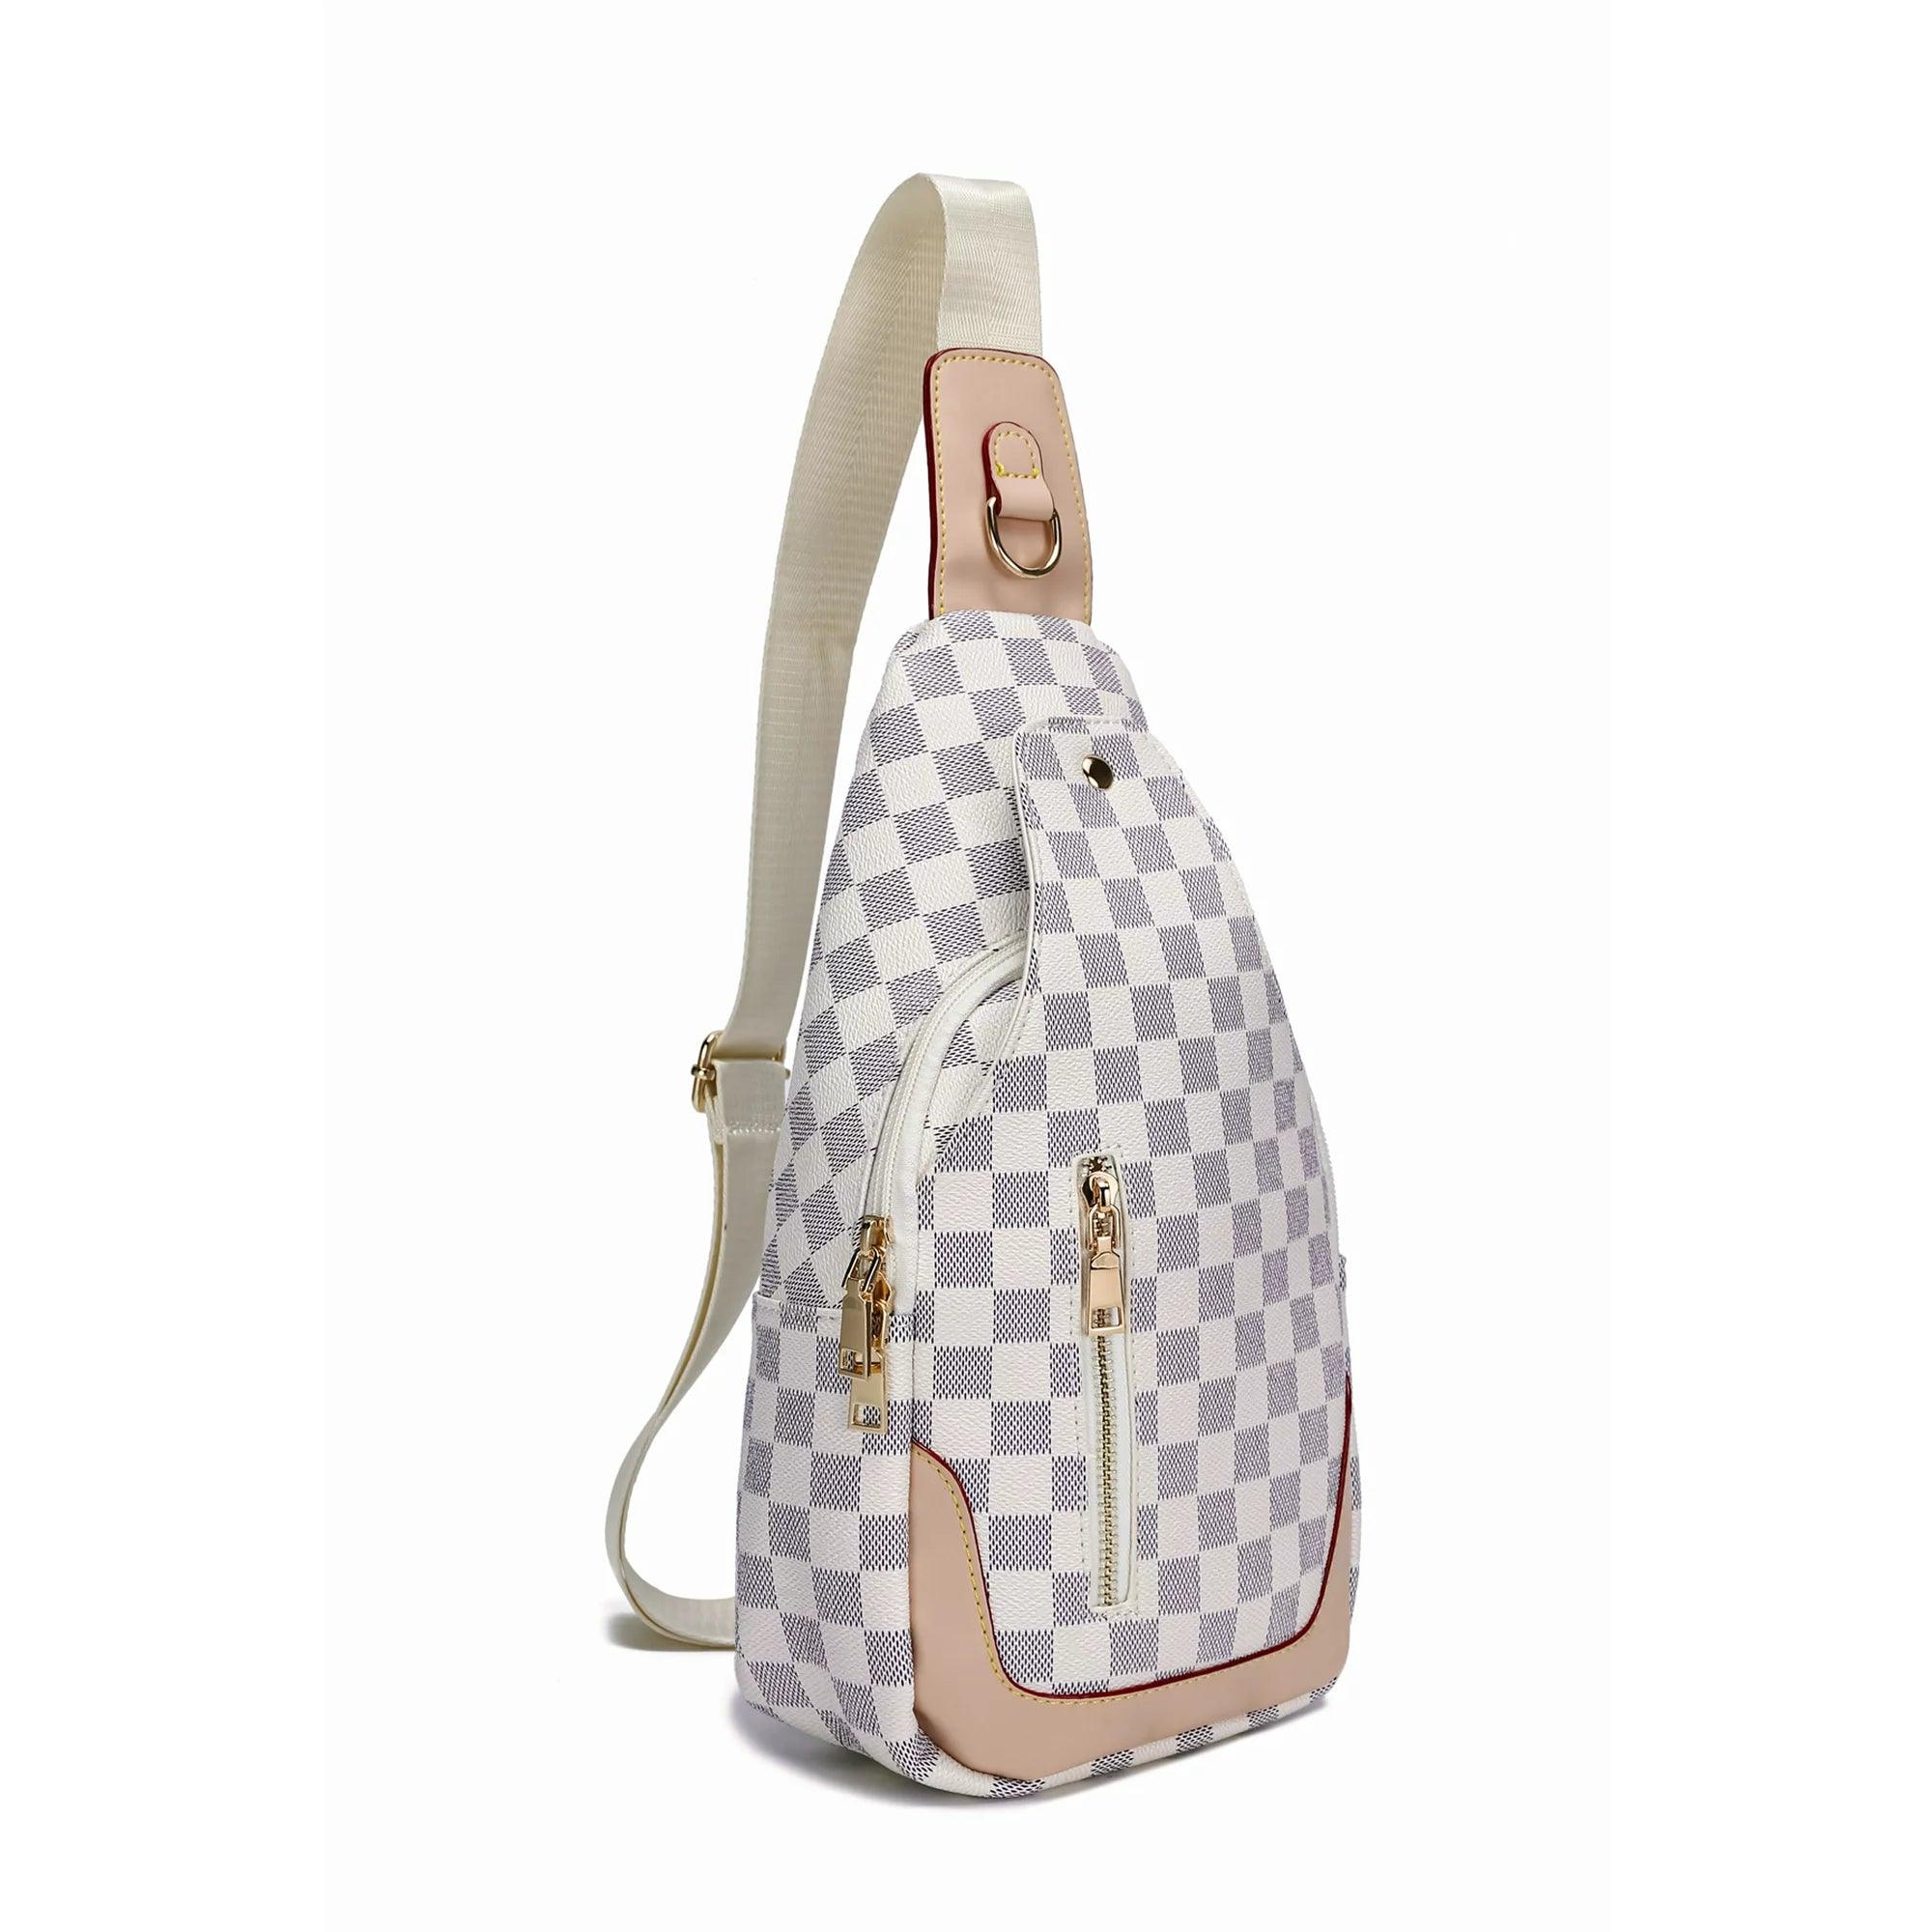 FR Fashion Co. 13" White Checkered Print Leather Crossbody Sling Bag - FR Fashion Co. 